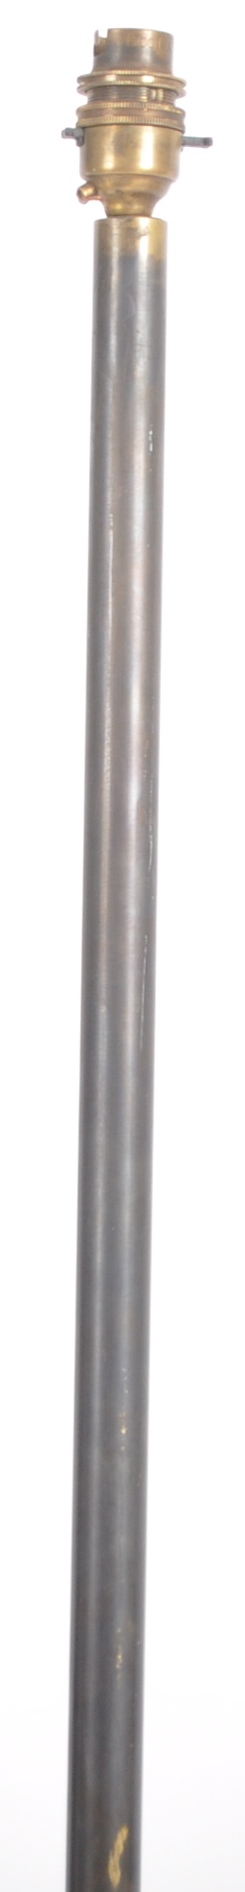 FAUX MARBLE COLUMN FLOOR STANDING STANDARD LAMP LIGHT - Image 6 of 6